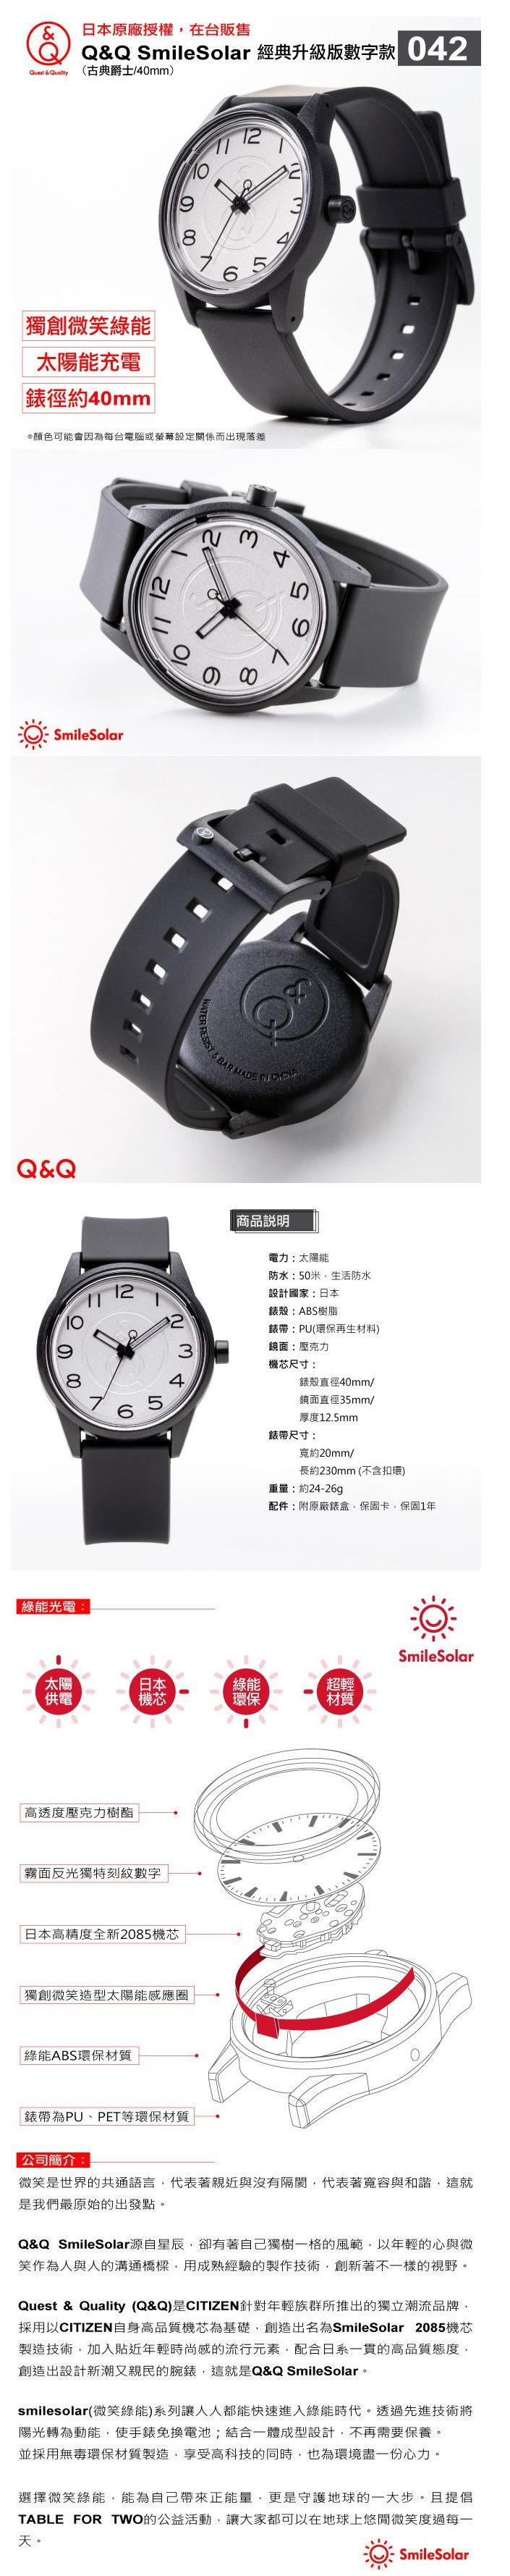 Q＆Q SmileSolar 經典升級數字款 太陽能手錶 (042 古典爵士/40mm)